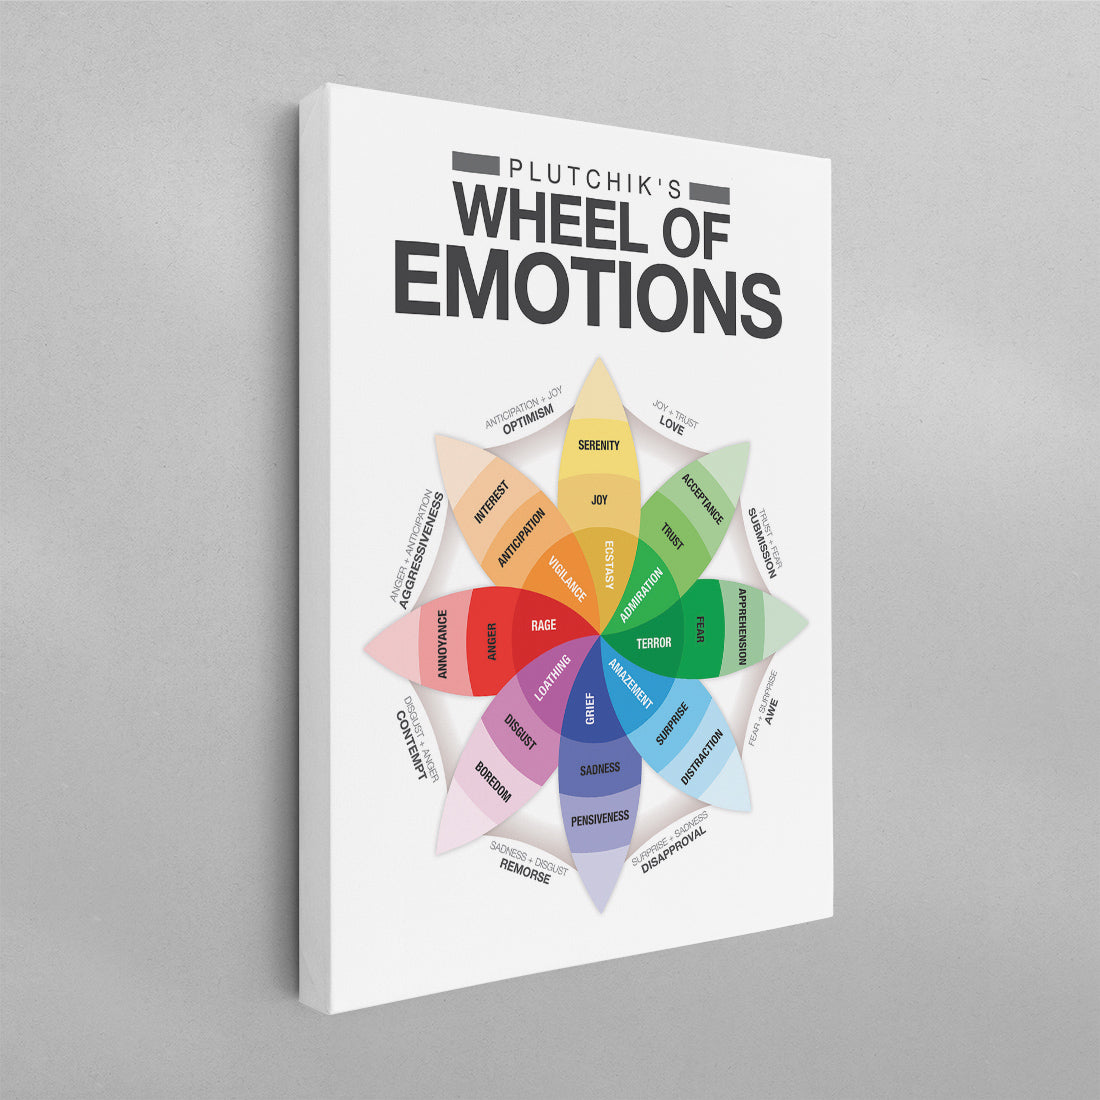 Plutchik’s Wheel of Emotions